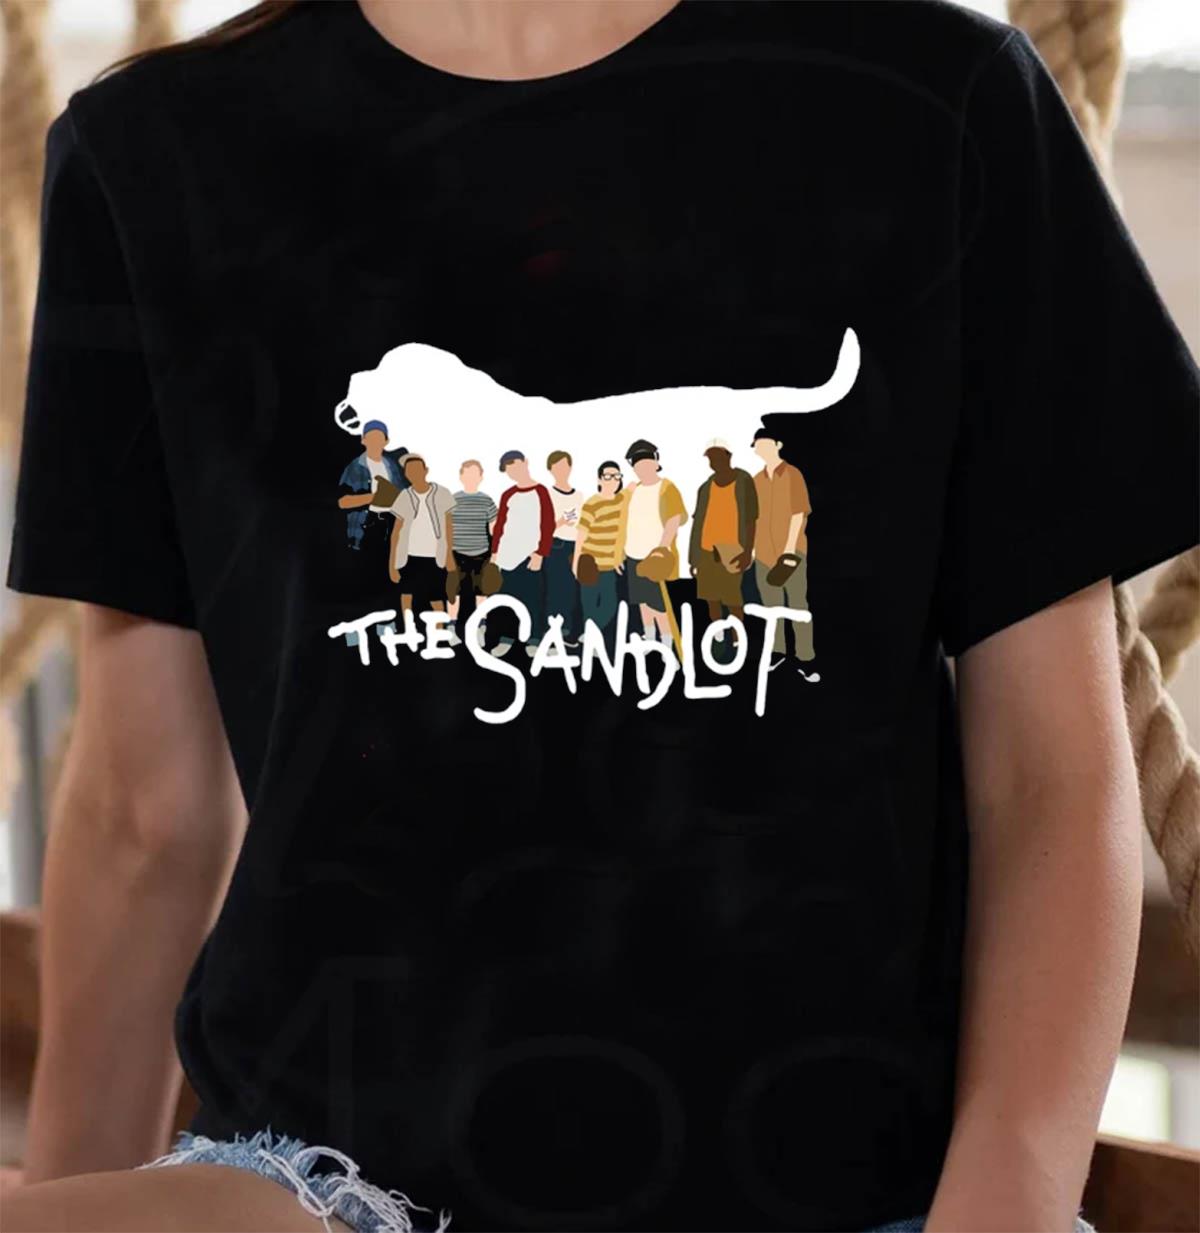 Sandlot With friends group 90s vintage shirt, hoodie, tank top